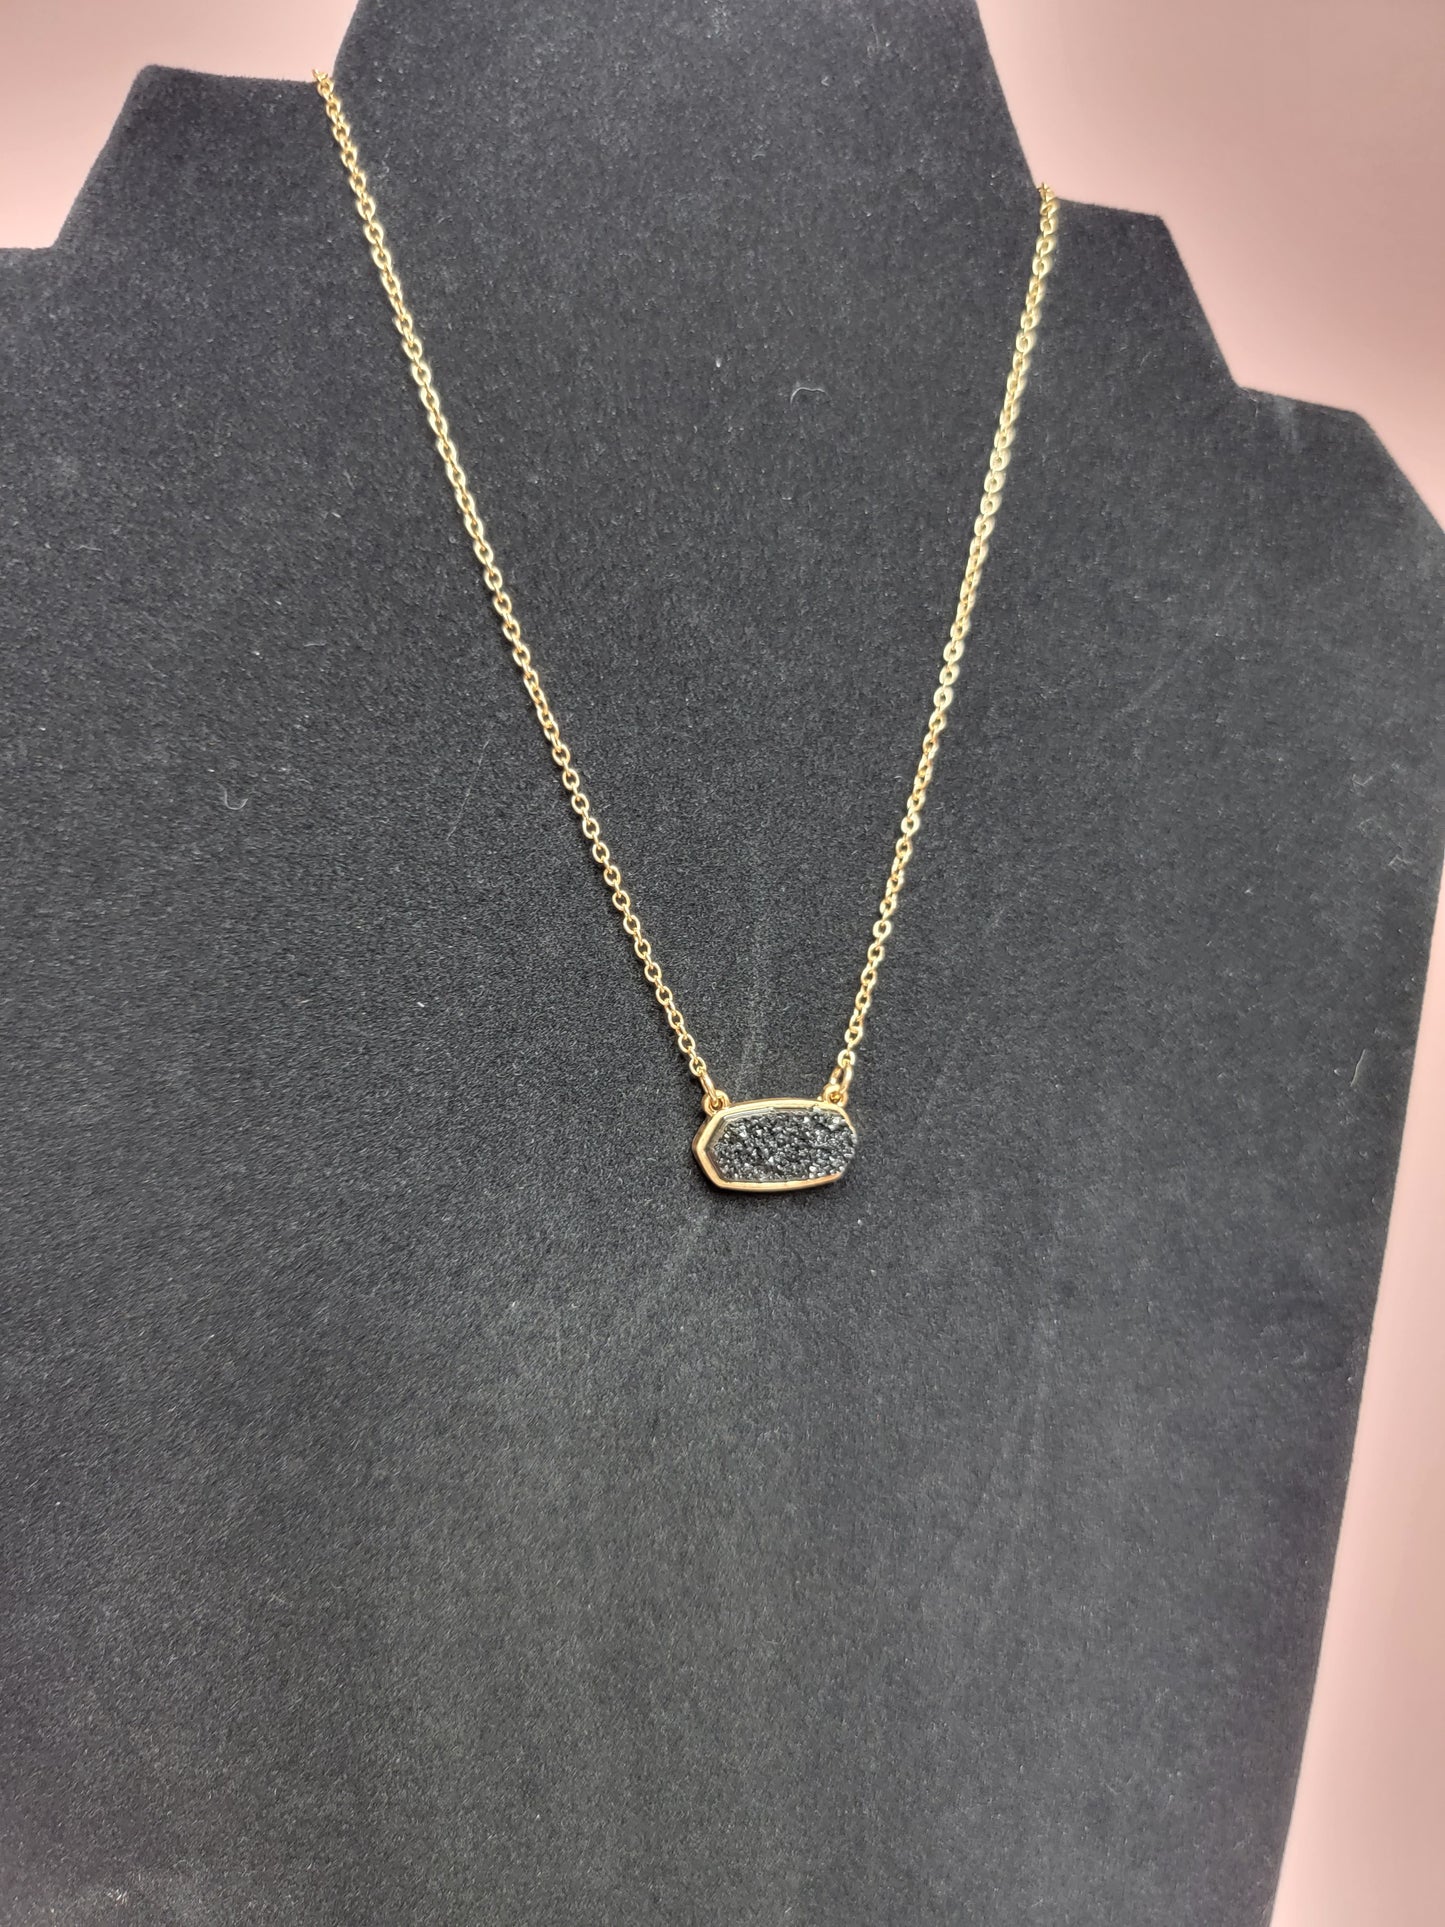 Black Stone Gold Necklace